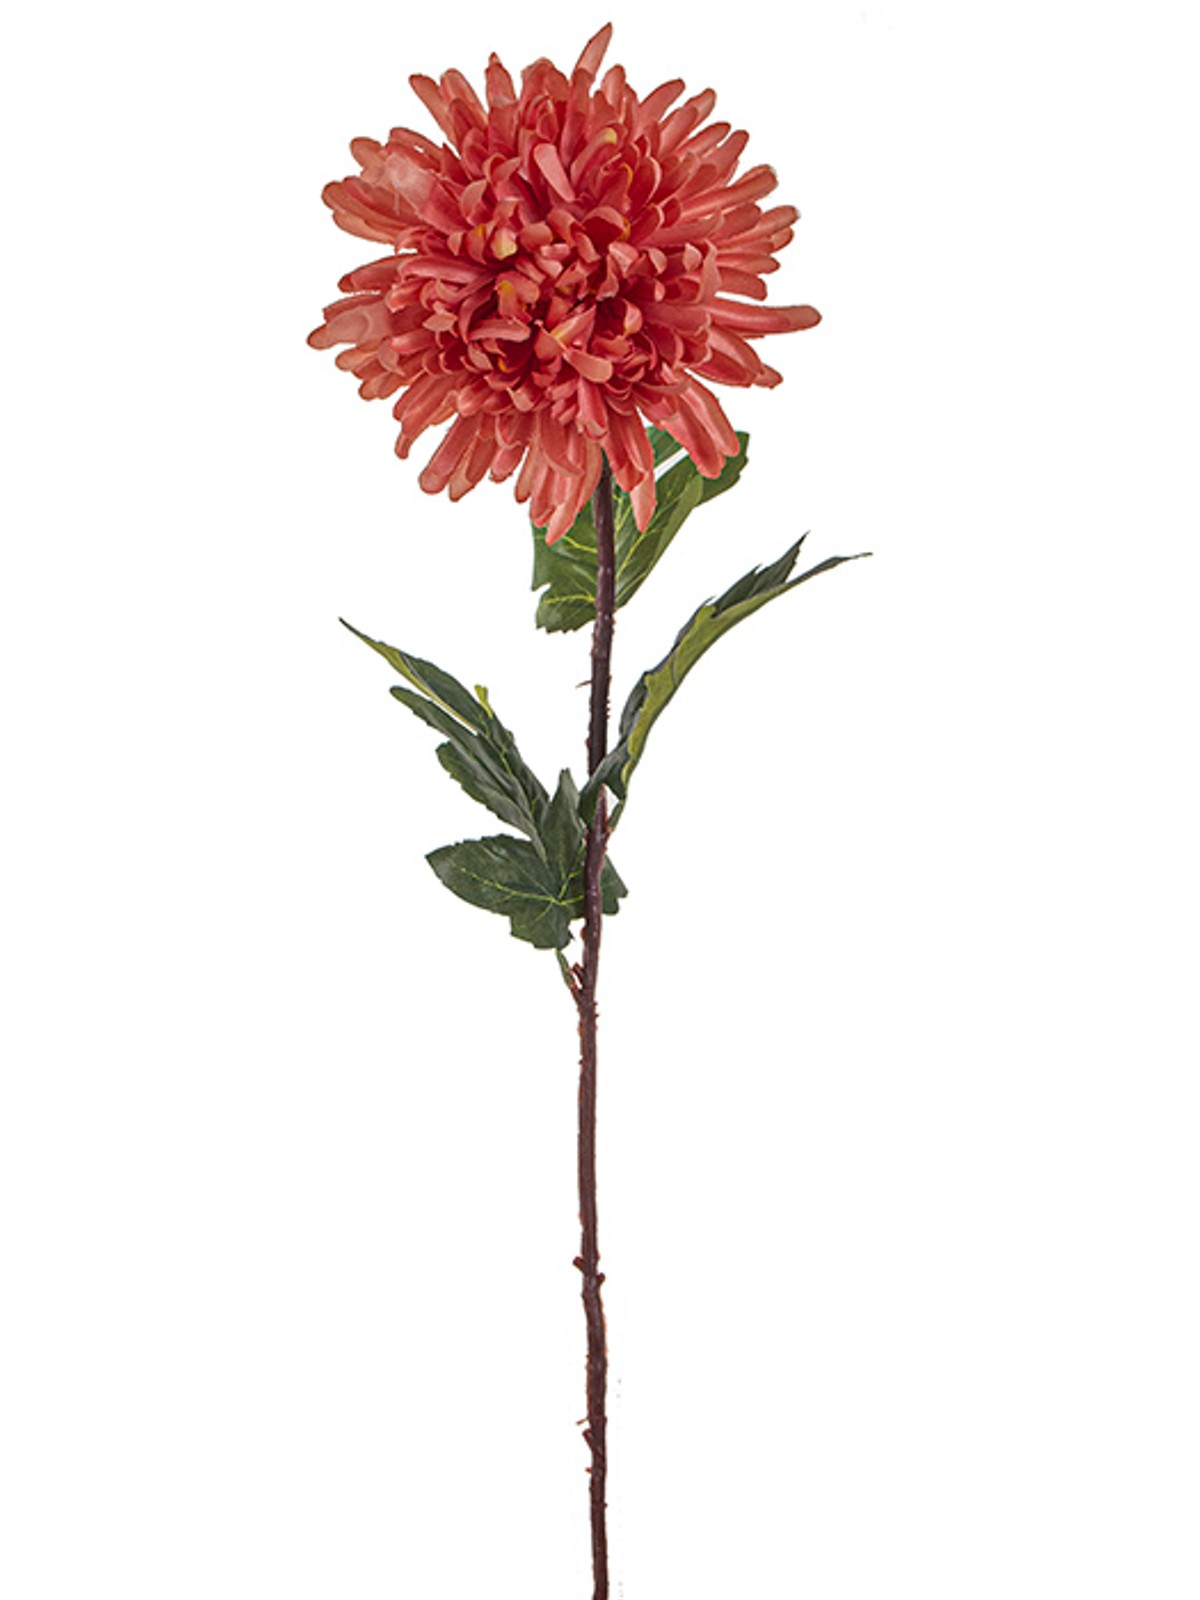 Coral chrysanthemum